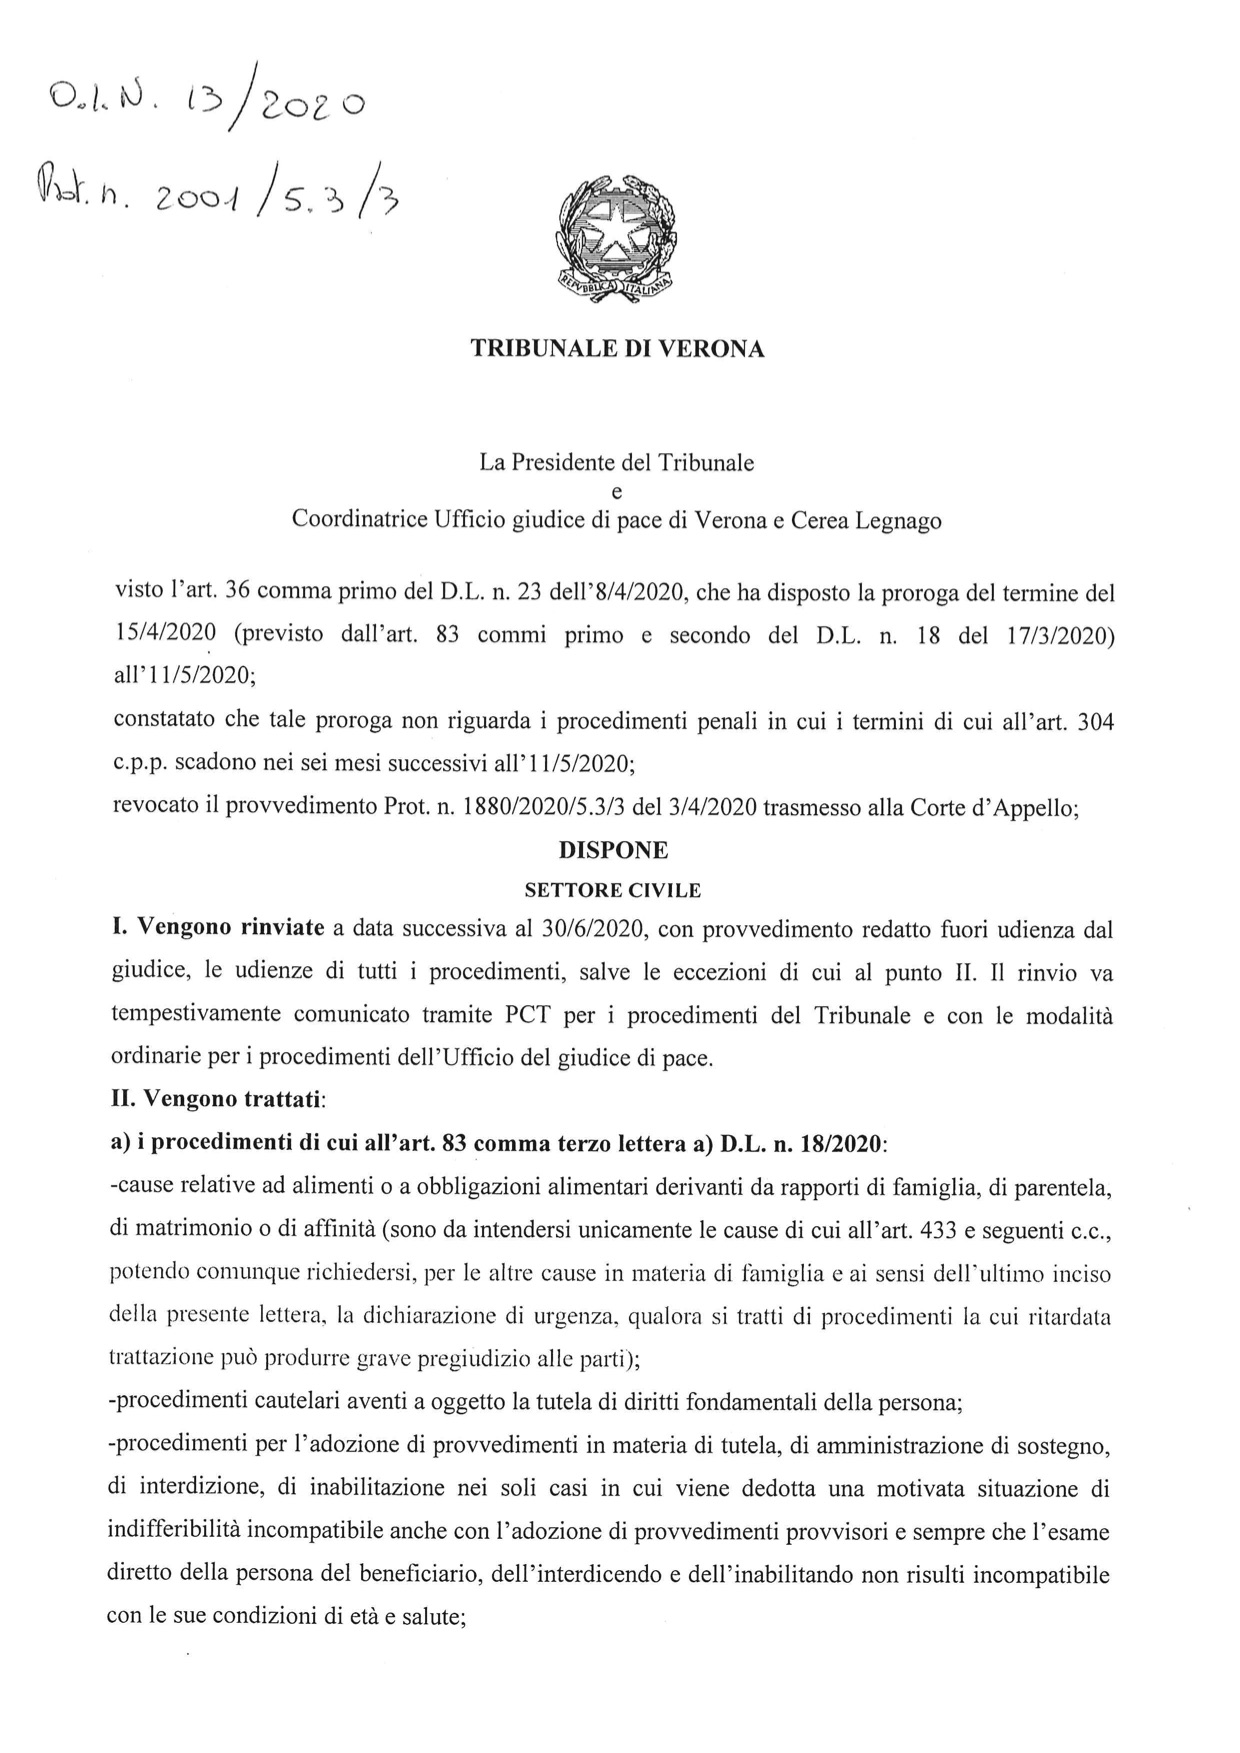 Provvedimento Presidente Tribunale di Verona n. 13 del 9 aprile 2020